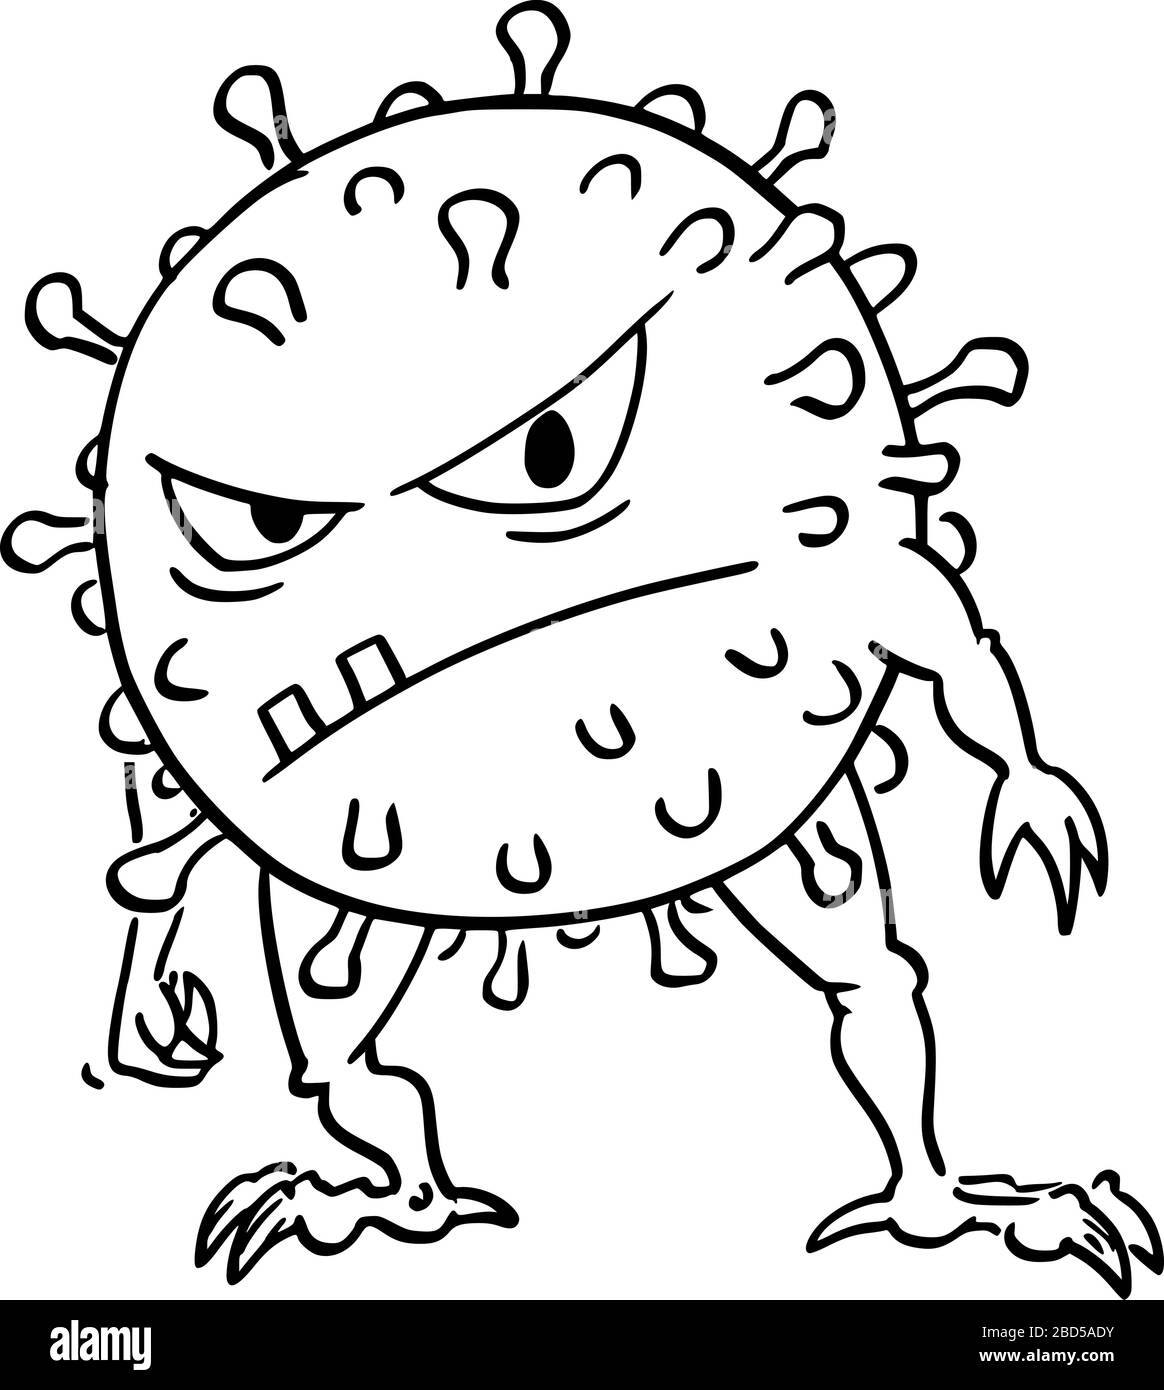 Vector Cartoon Funny Illustration Of Funny Crazy Coronavirus Covid 19 Virus Monster Stock Vector Image Art Alamy